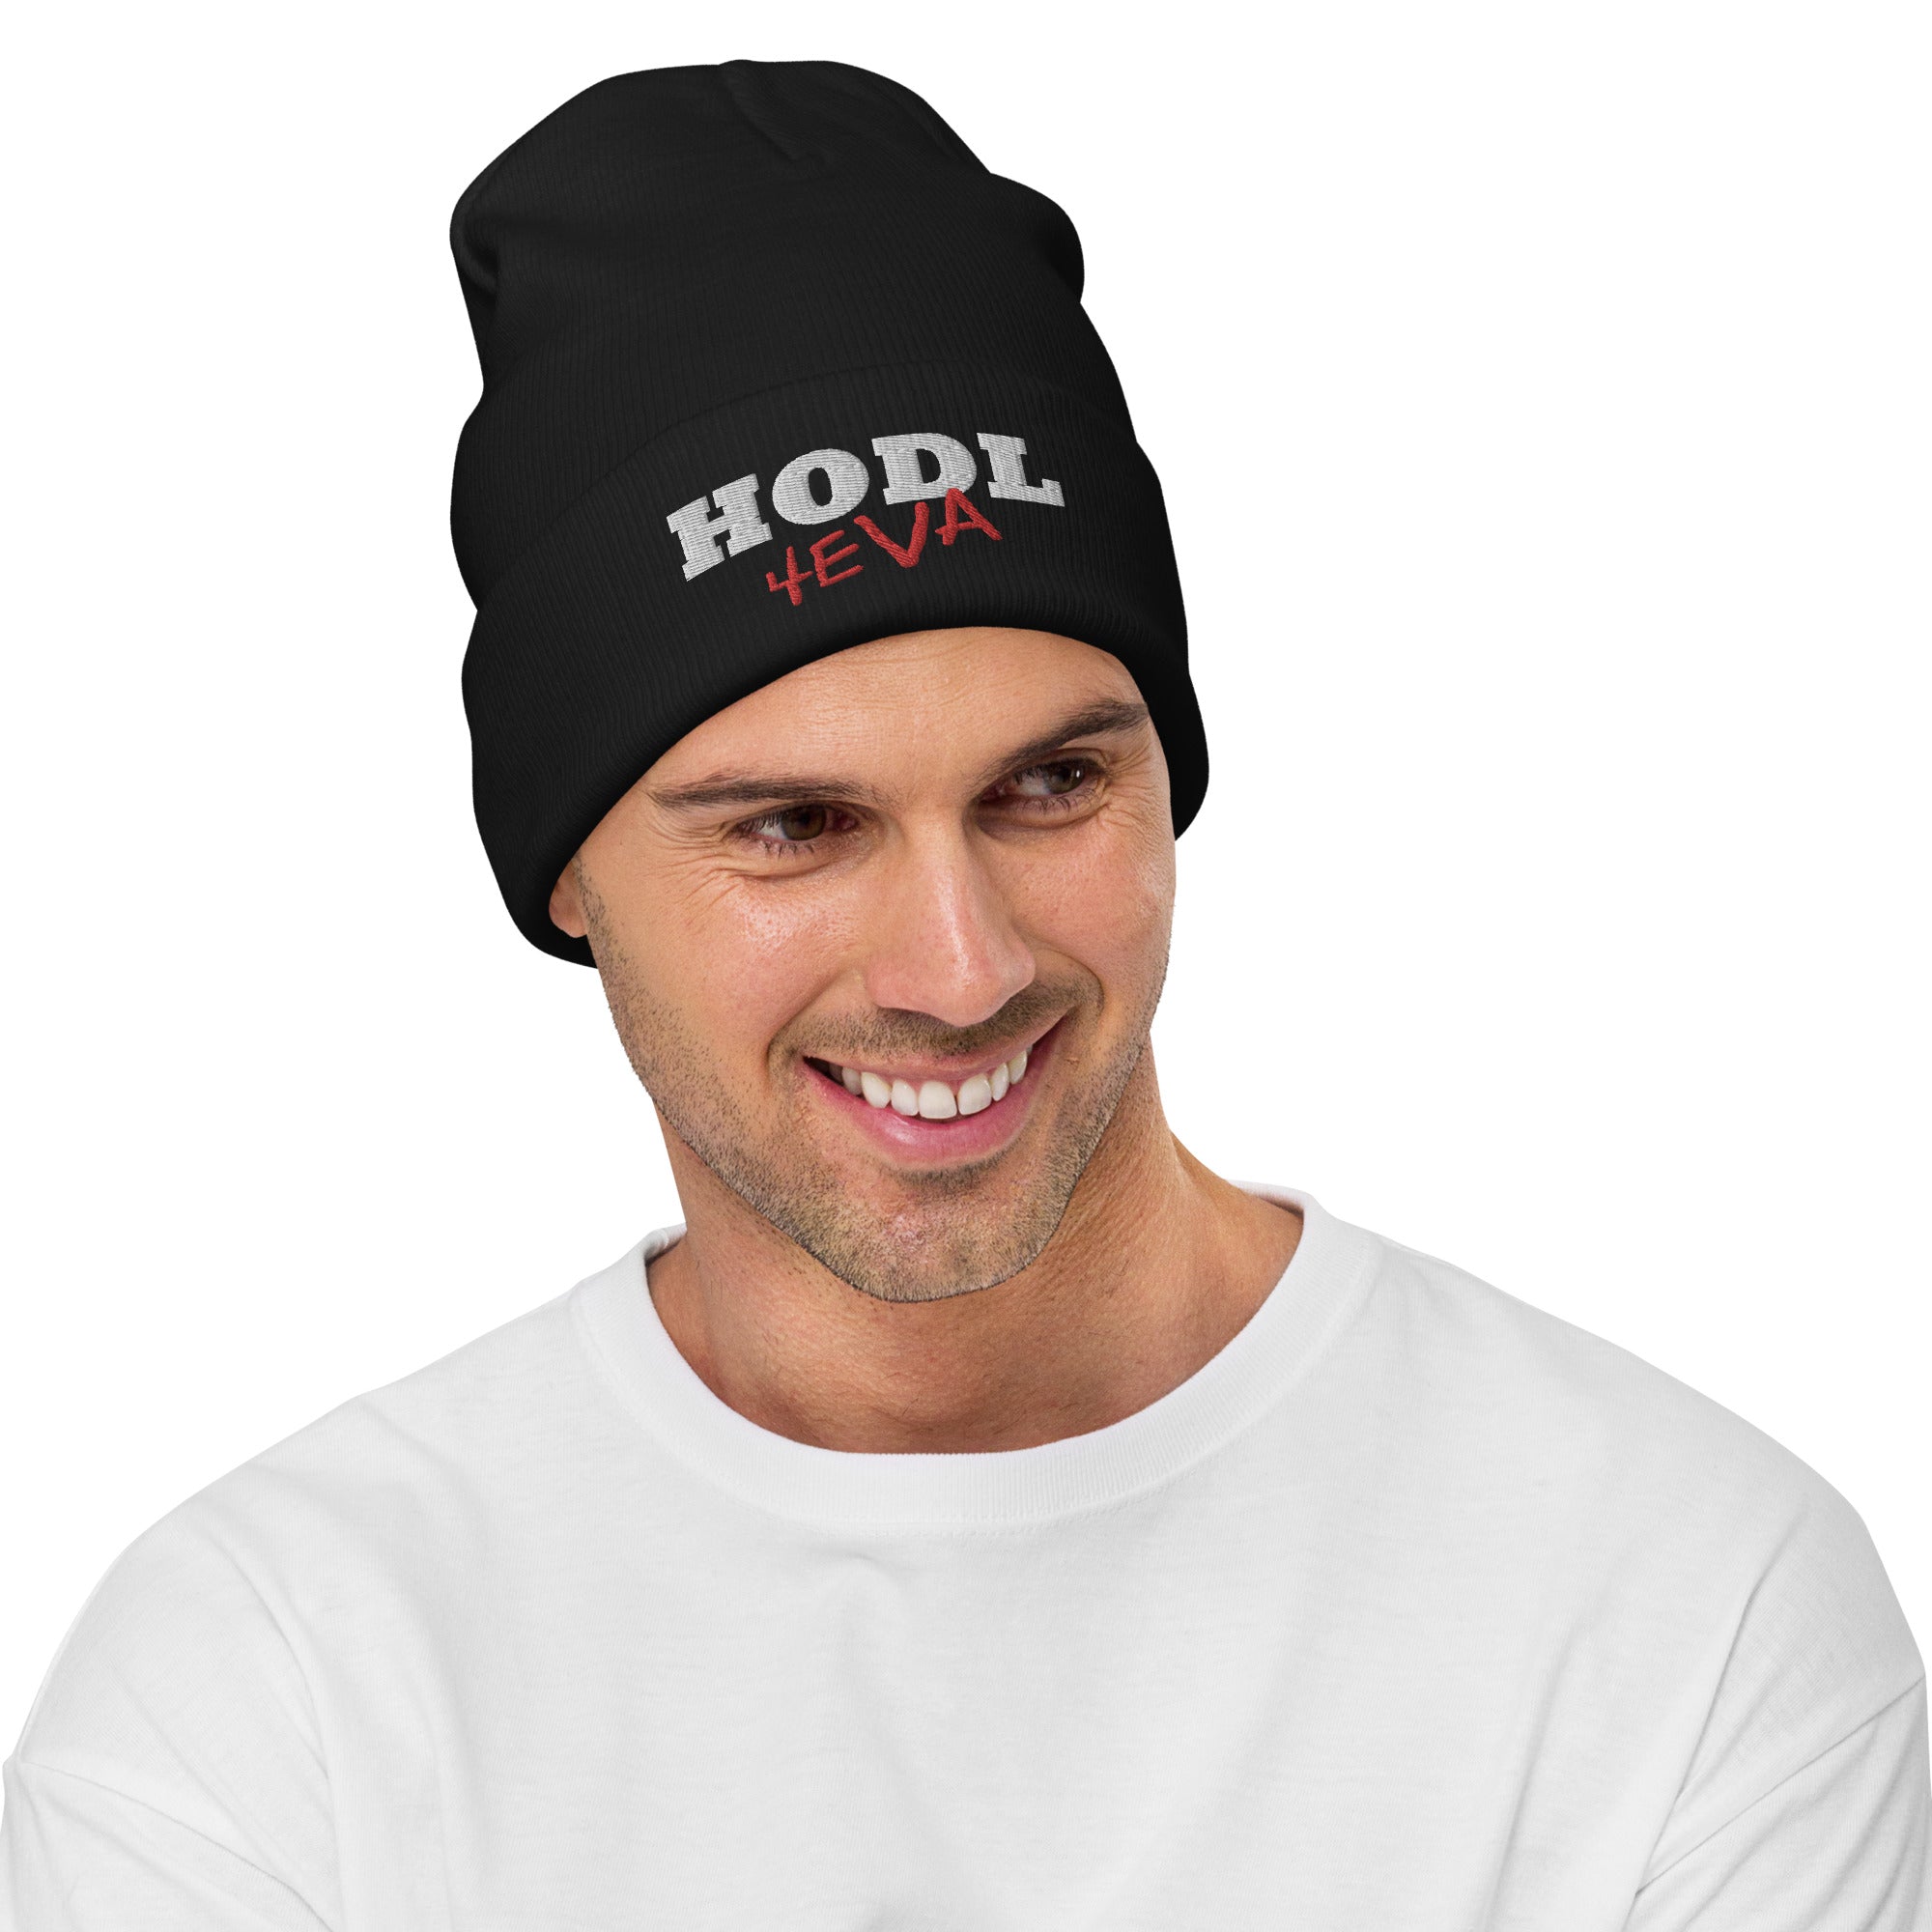 HODL Diamond Hands Your Crypto 4Eva Bitcoin Ethereum Embroidered Cuff Beanie Cap